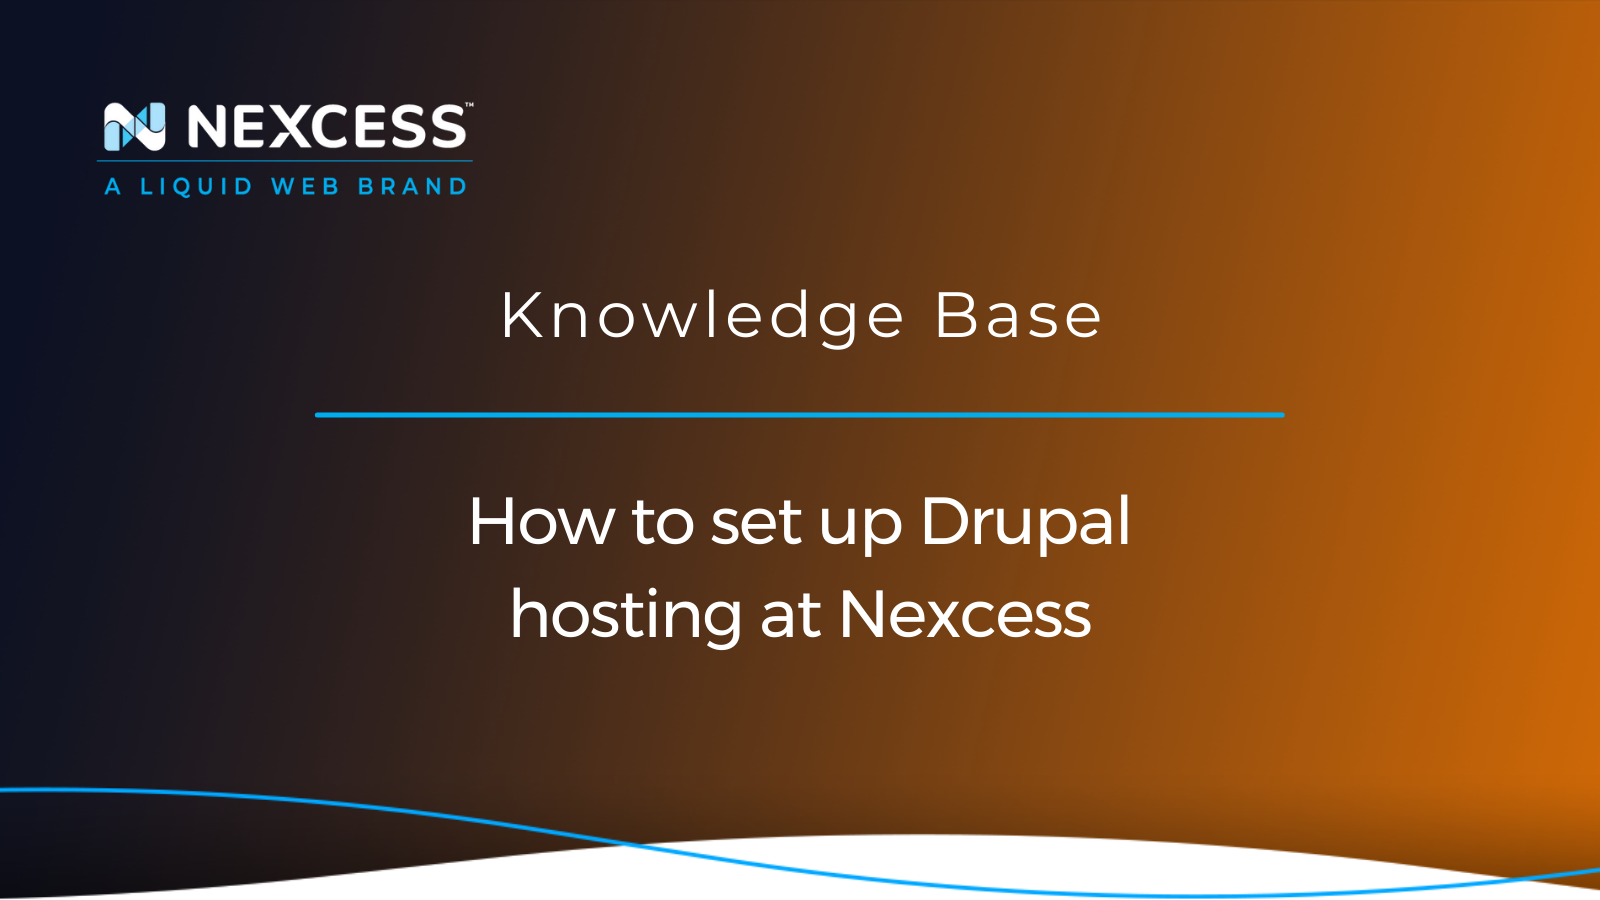 How to set up Drupal hosting at Nexcess